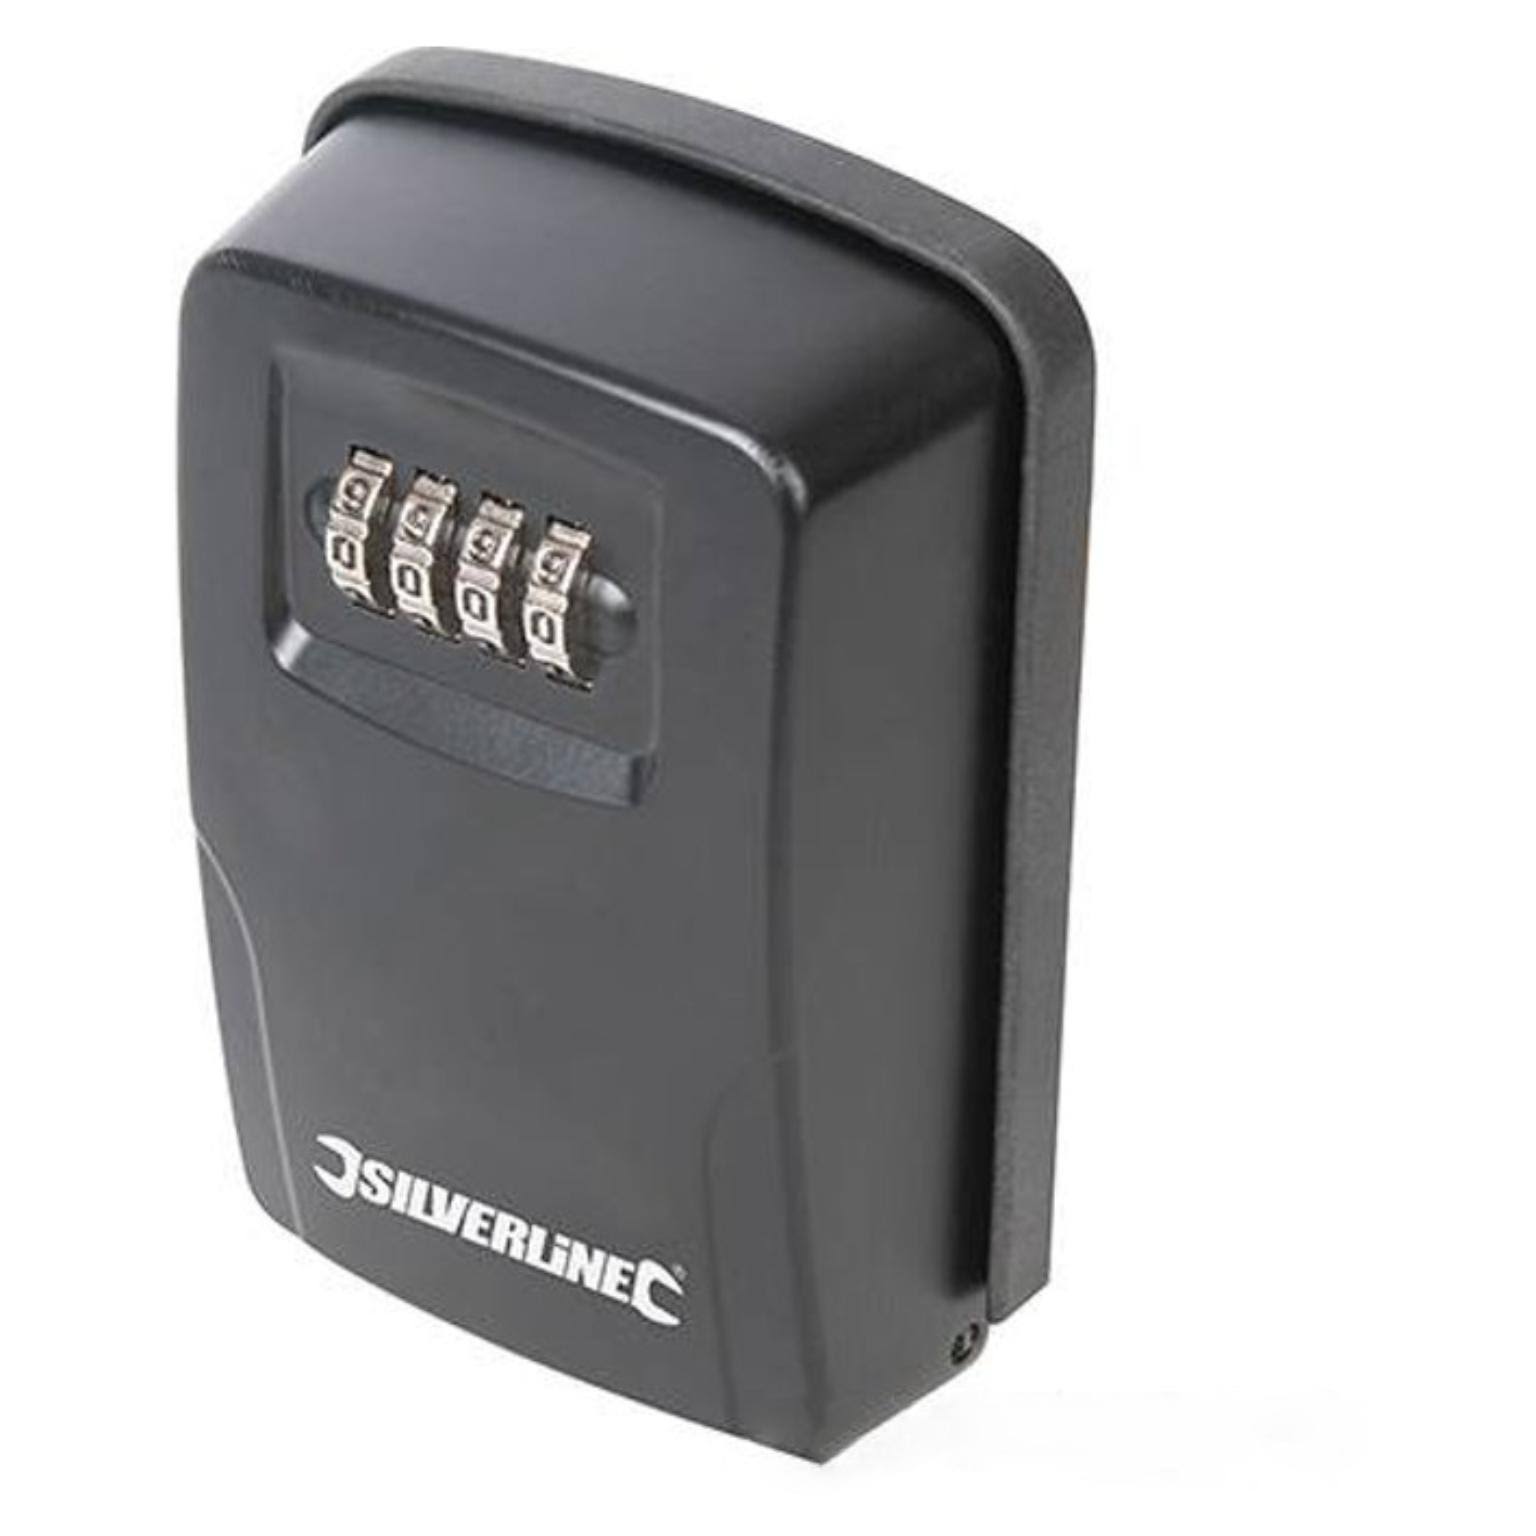 Silverline 309218 Key Safe Wall-mounted, Black, 121 x 83 x 40 mm